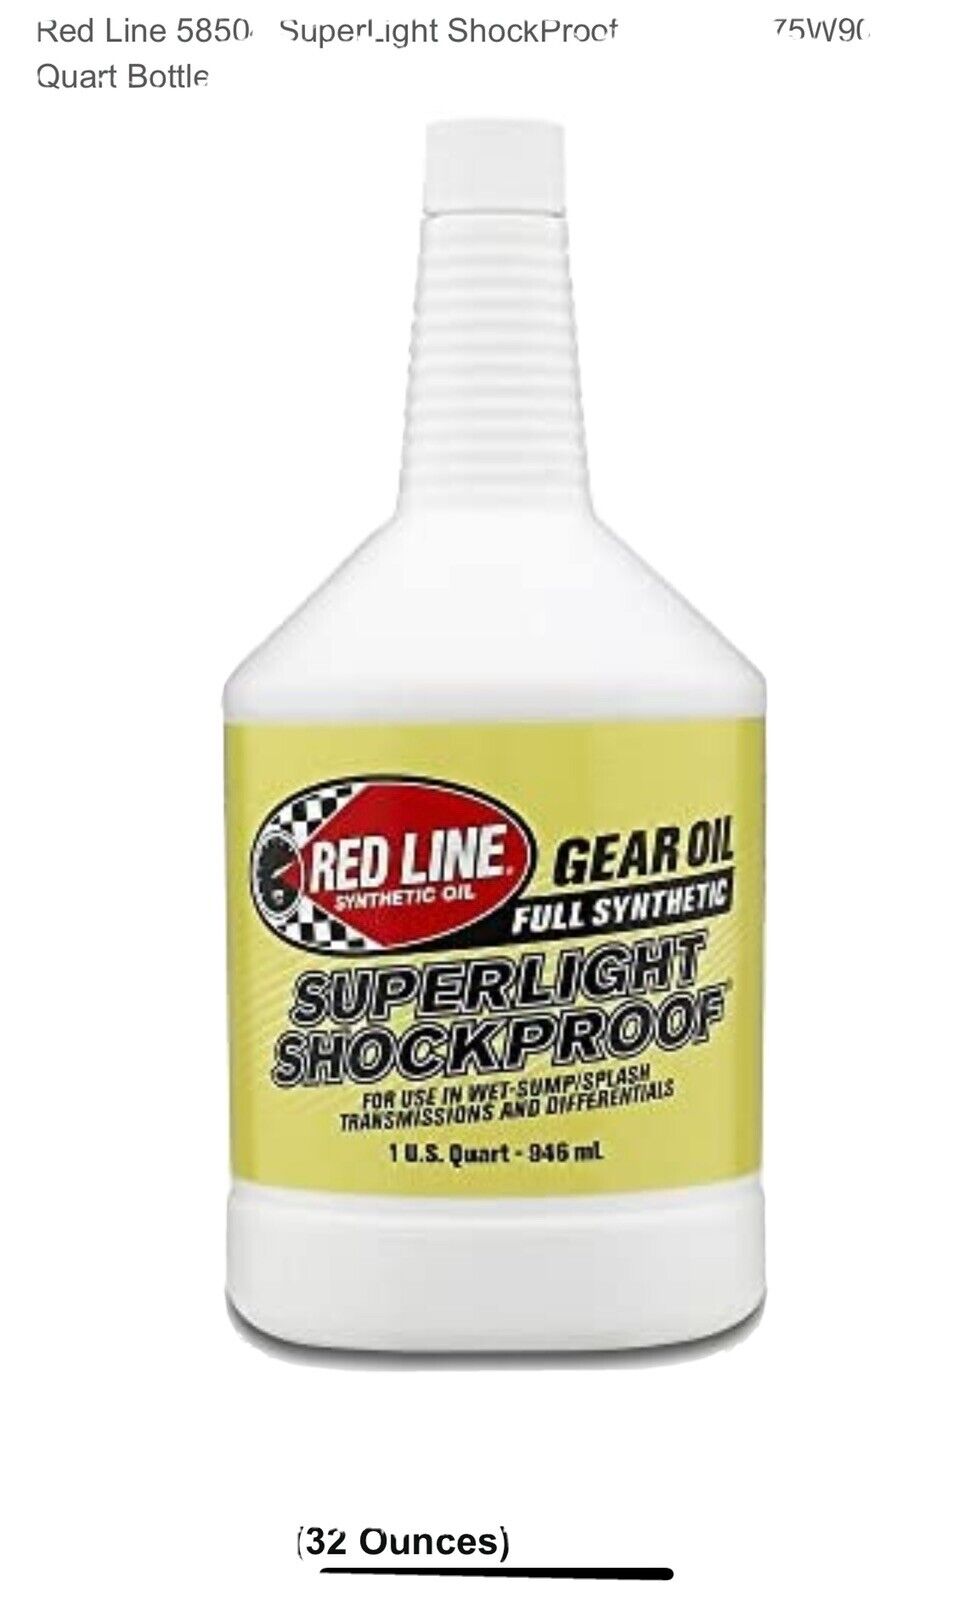 Red Line Oil 58504 Quart Bottle Superlight Shockproof SAE 75W-90 Synthetic Oil